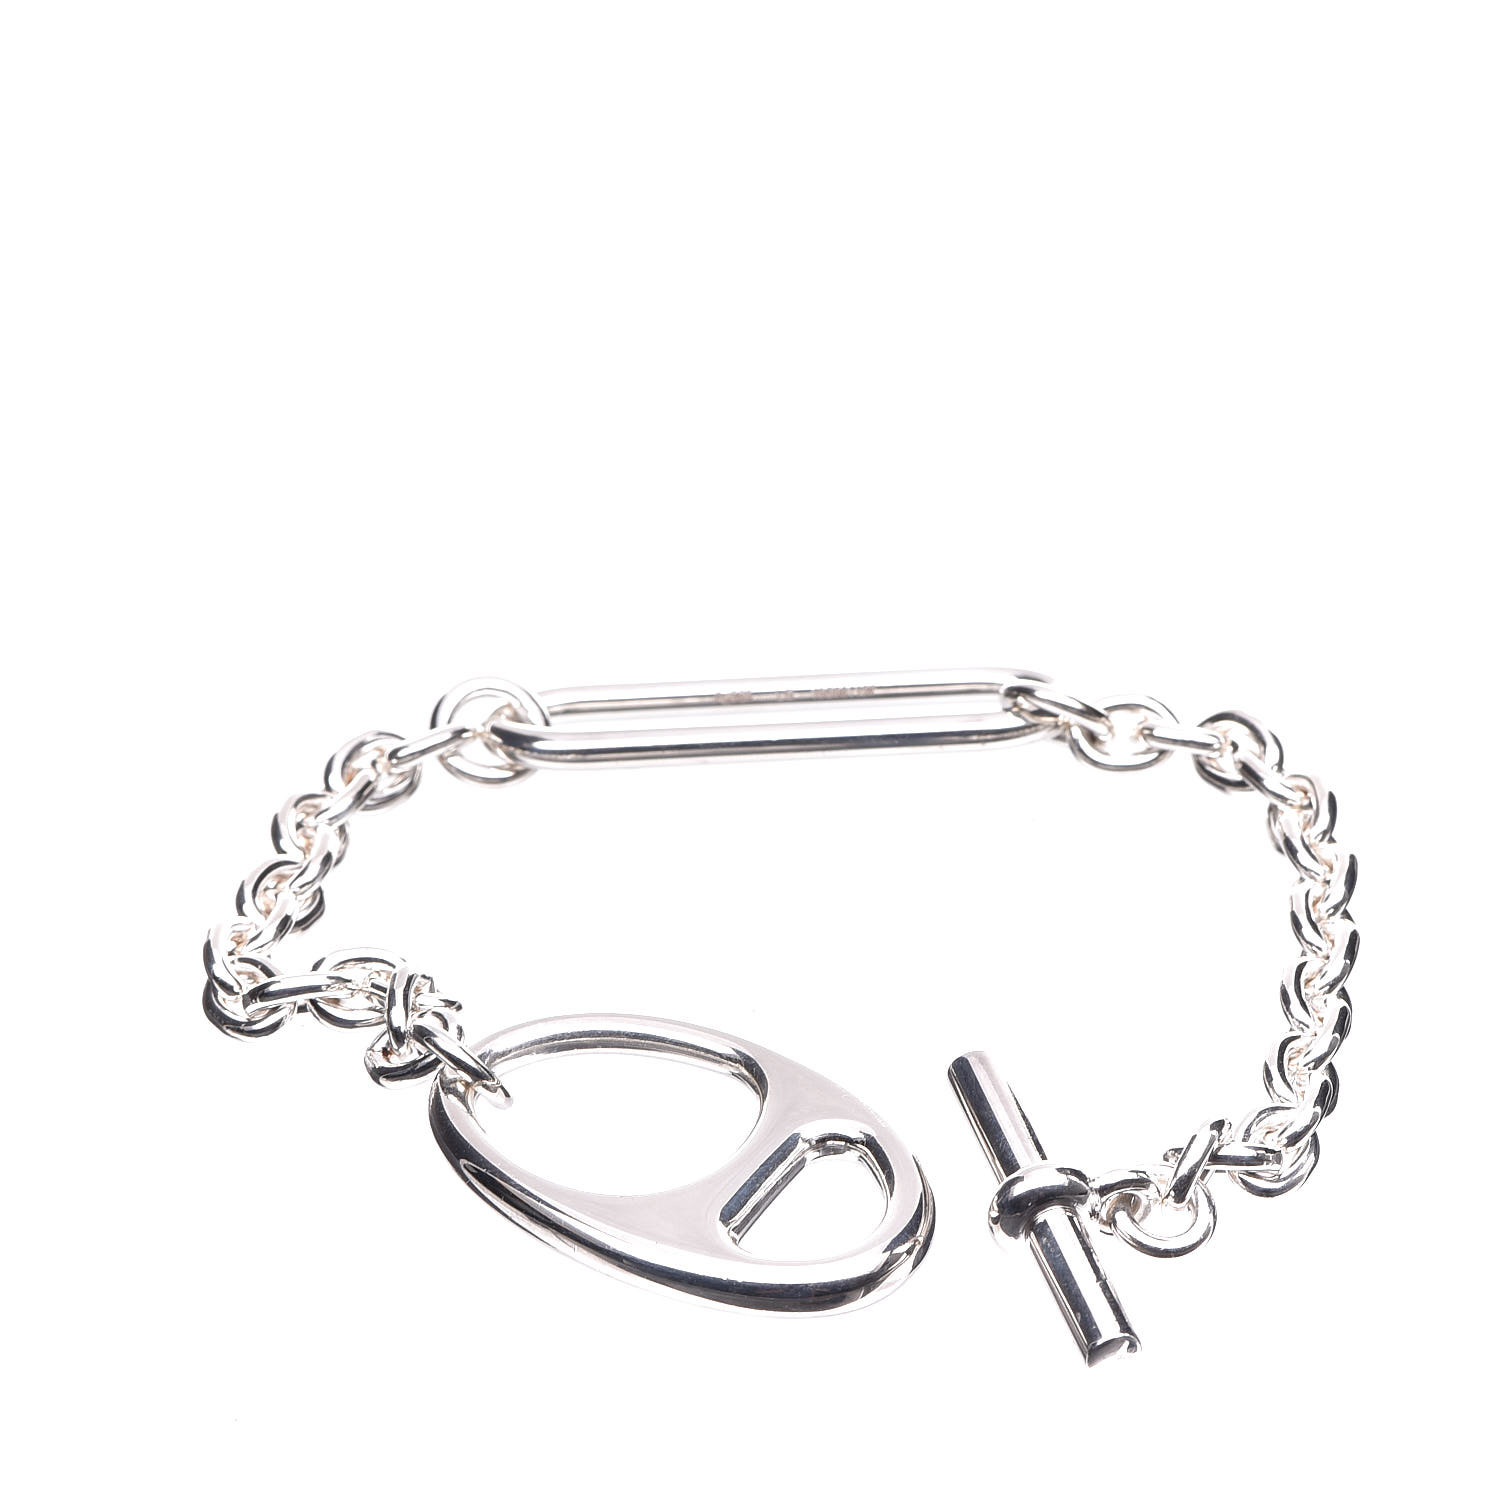 HERMES Sterling Silver Chaine d'Ancre Twist Bracelet LG 353499 